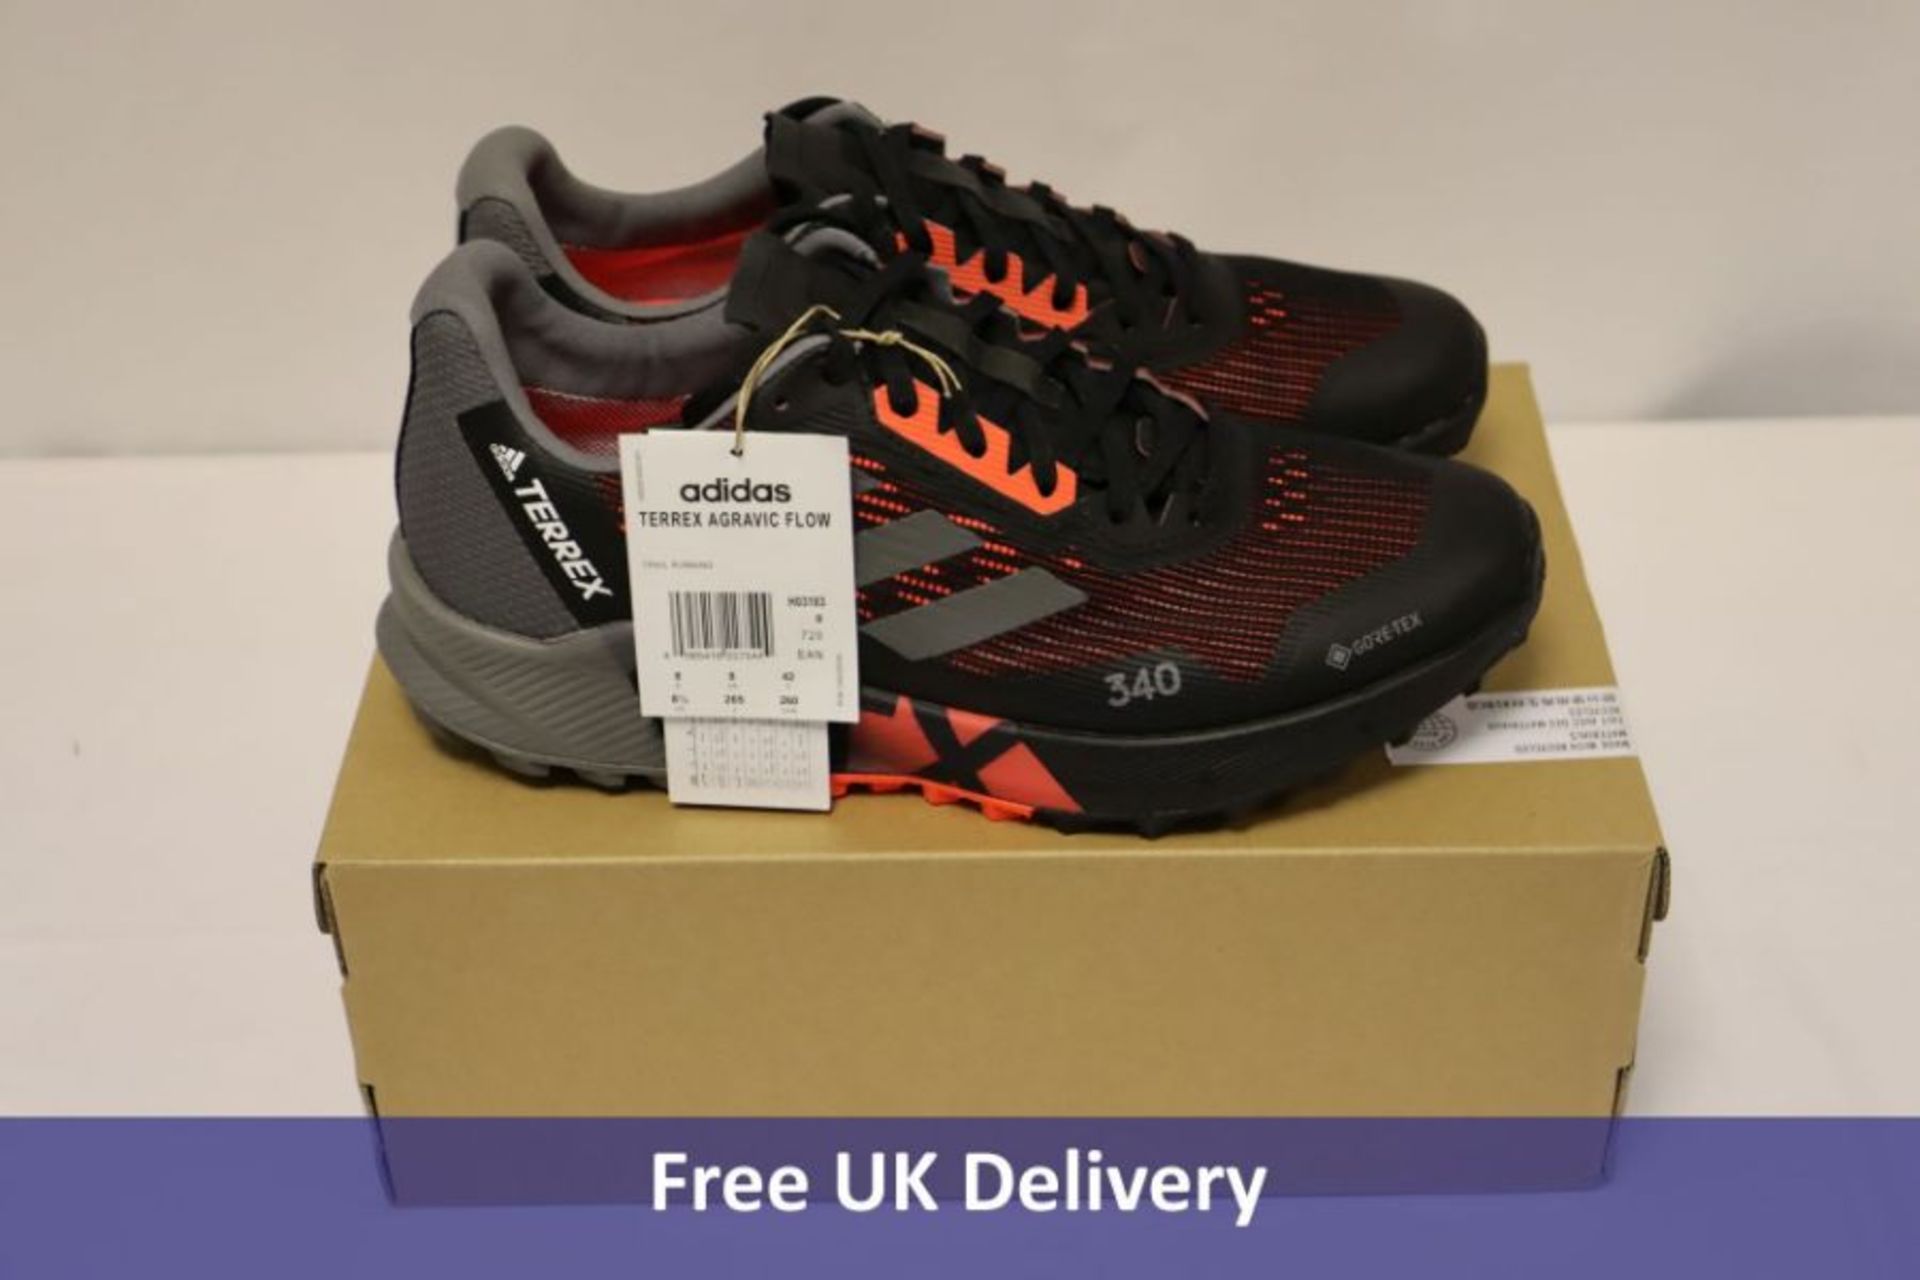 Adidas Terrex Agravic Flow 2 GTX Trail Running Shoes, Black/Red, UK 8